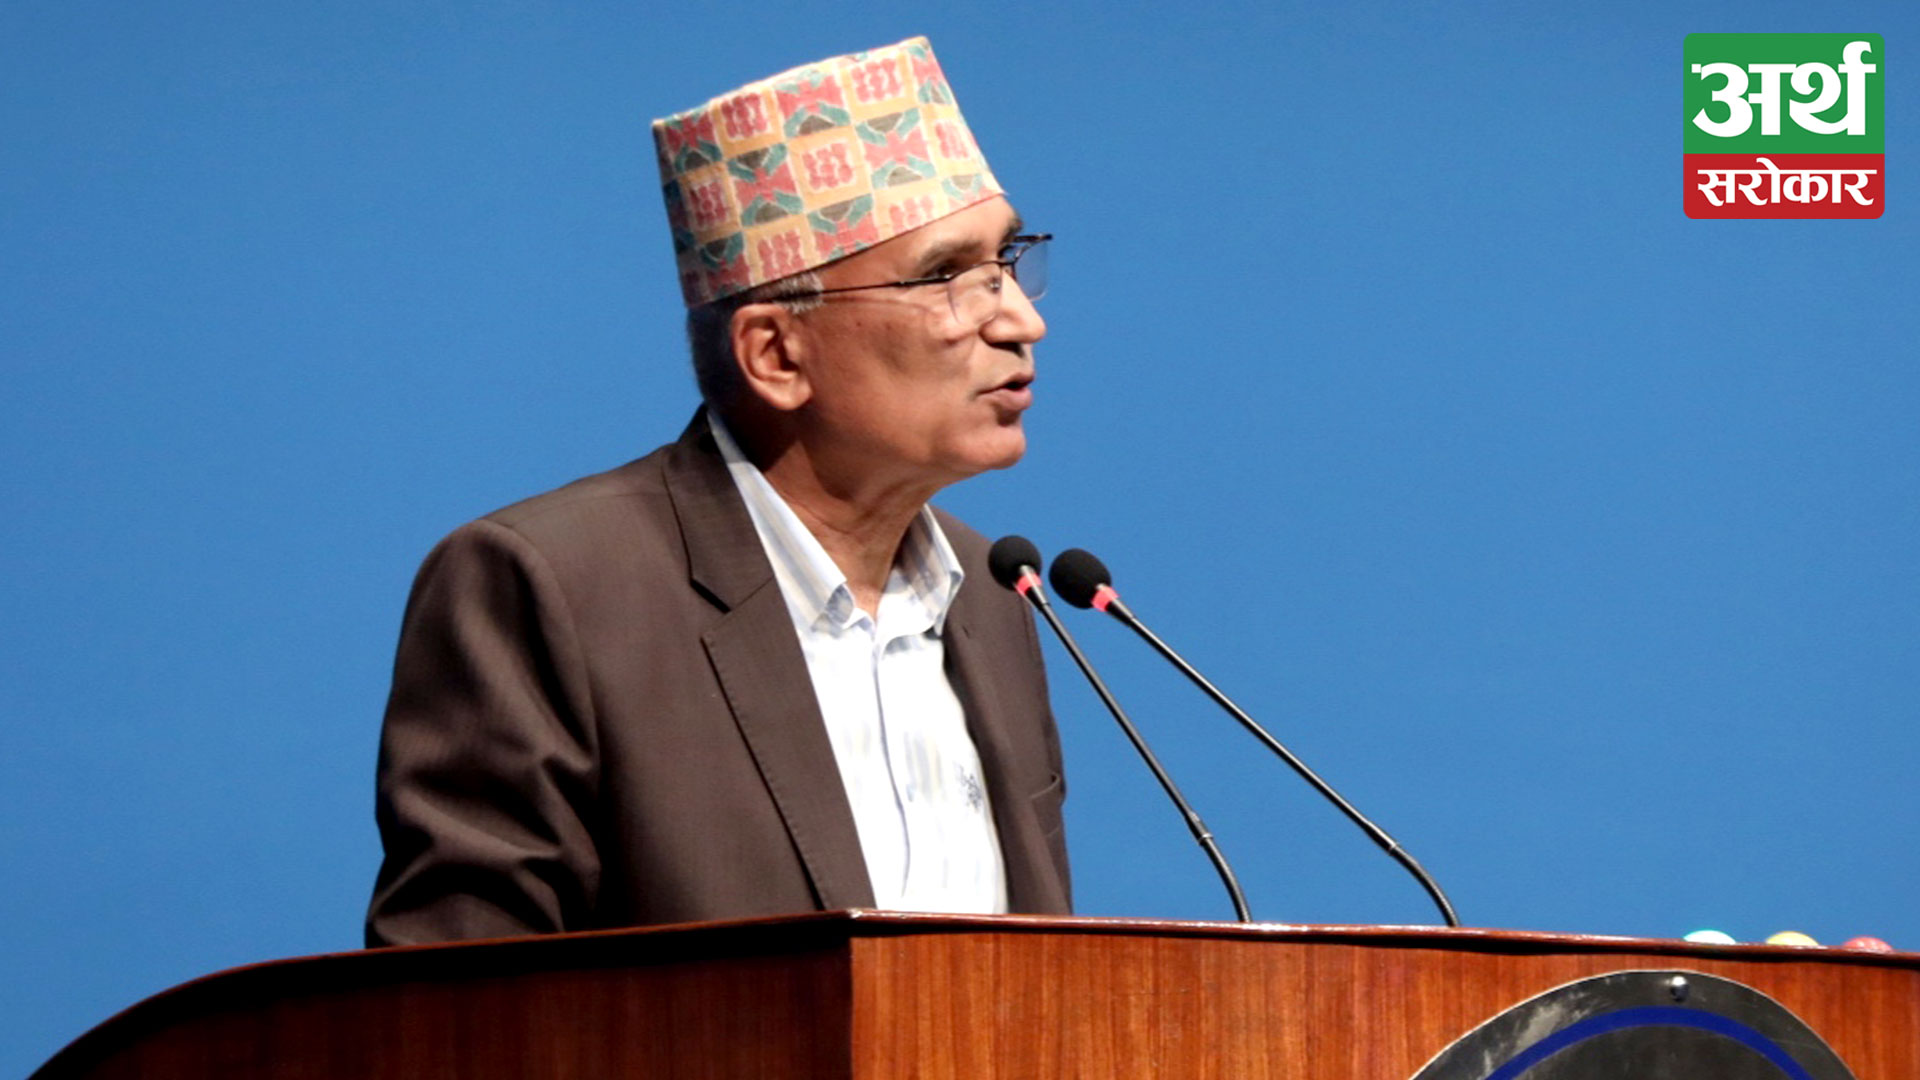 ‘Country is facing an economic downturn’- Bishnu Poudel